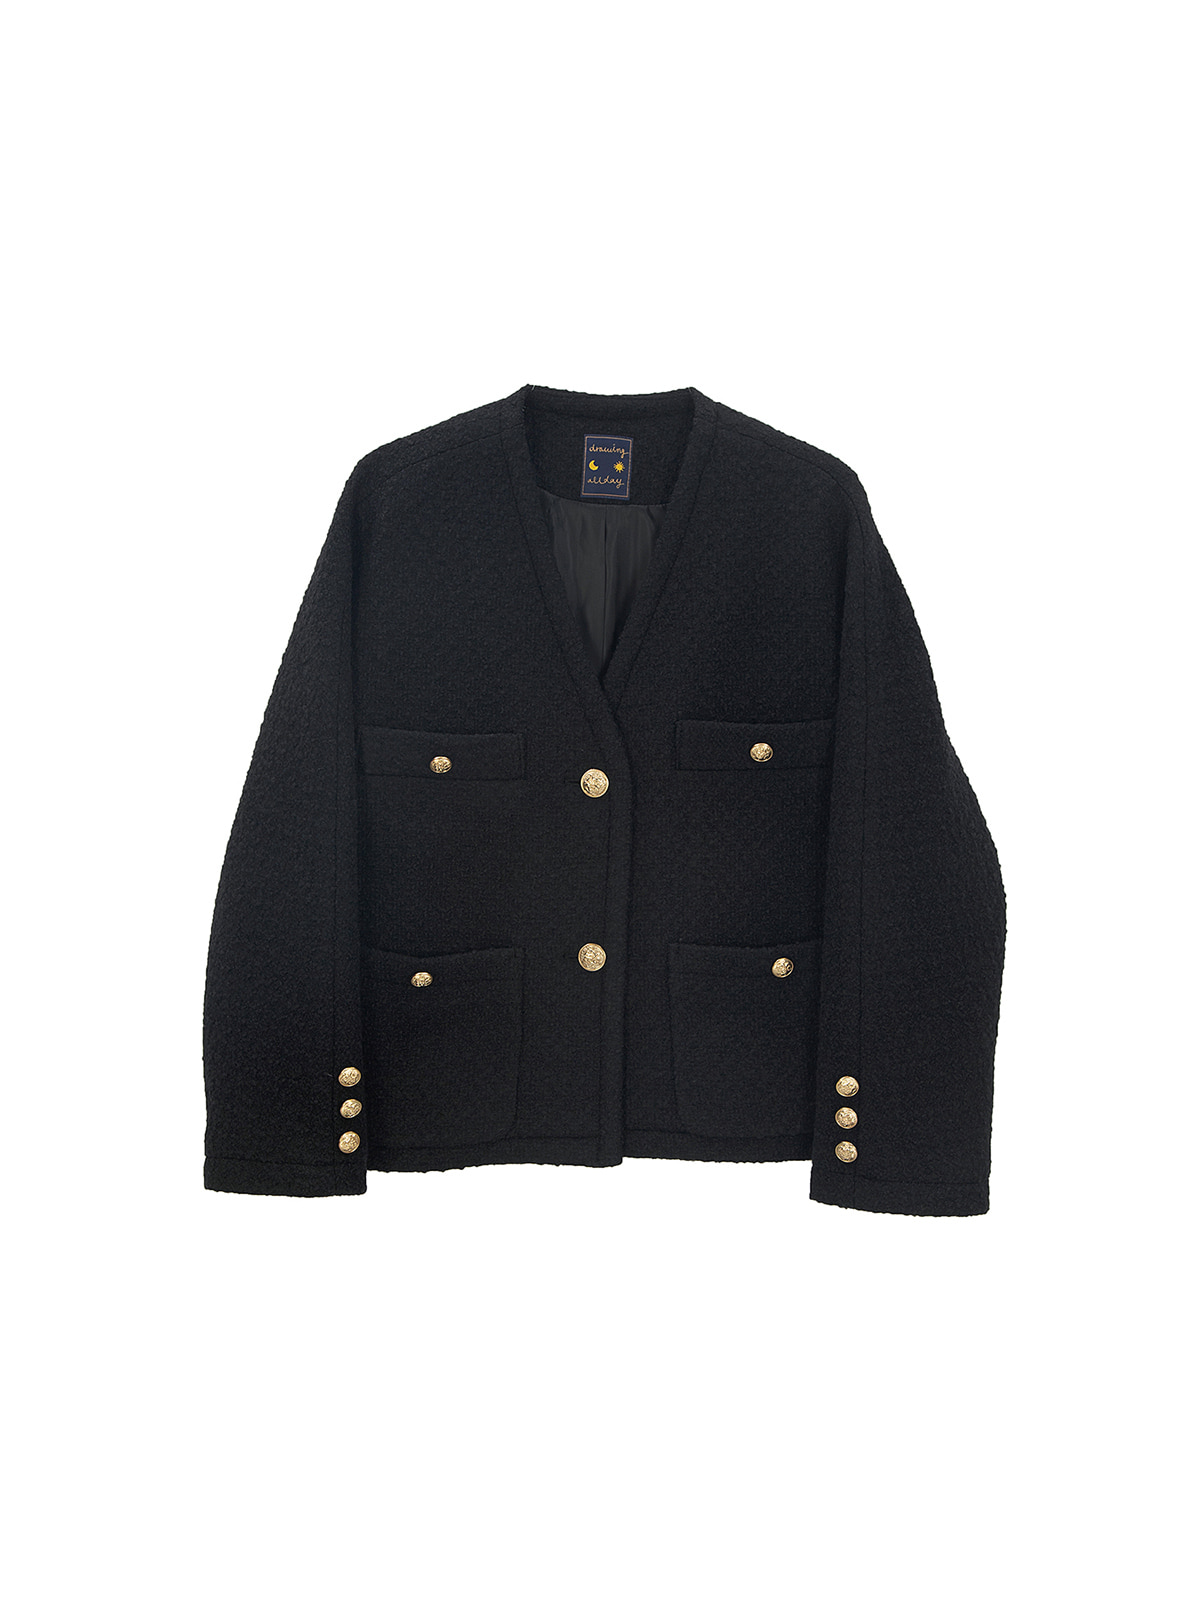 Gold Button Wool Jacket / Black